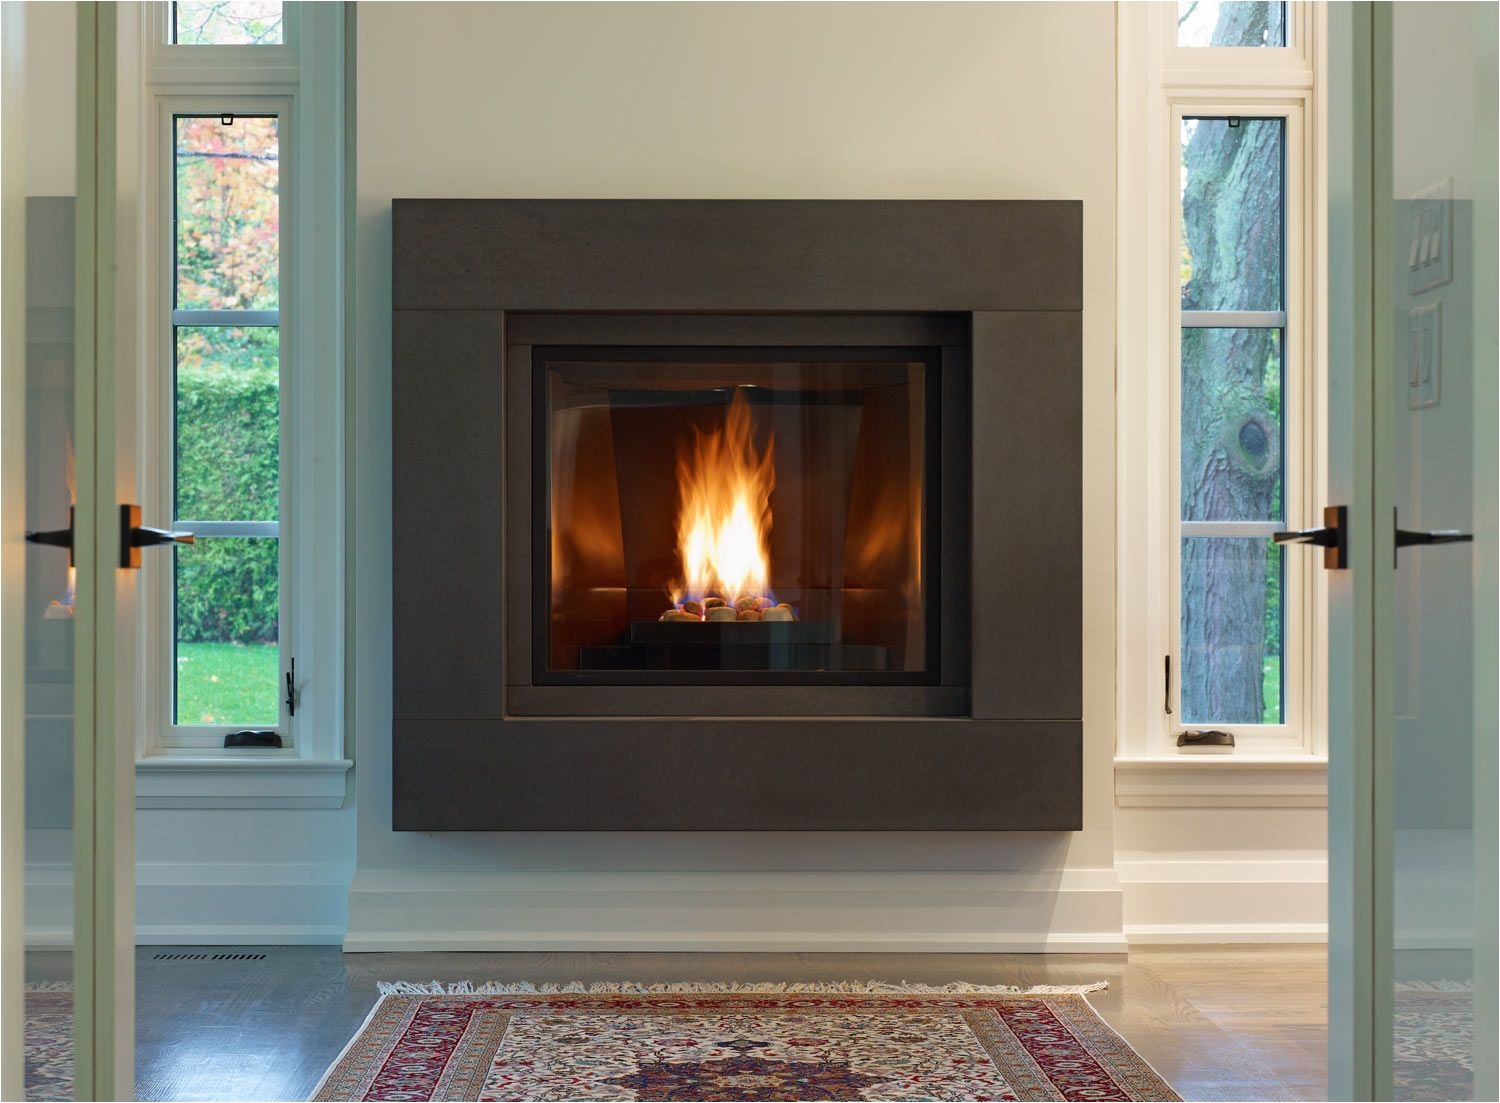 natural gas fireplace mantel modern fire pits and fireplaces paloform world fireplace of natural gas fireplace mantel